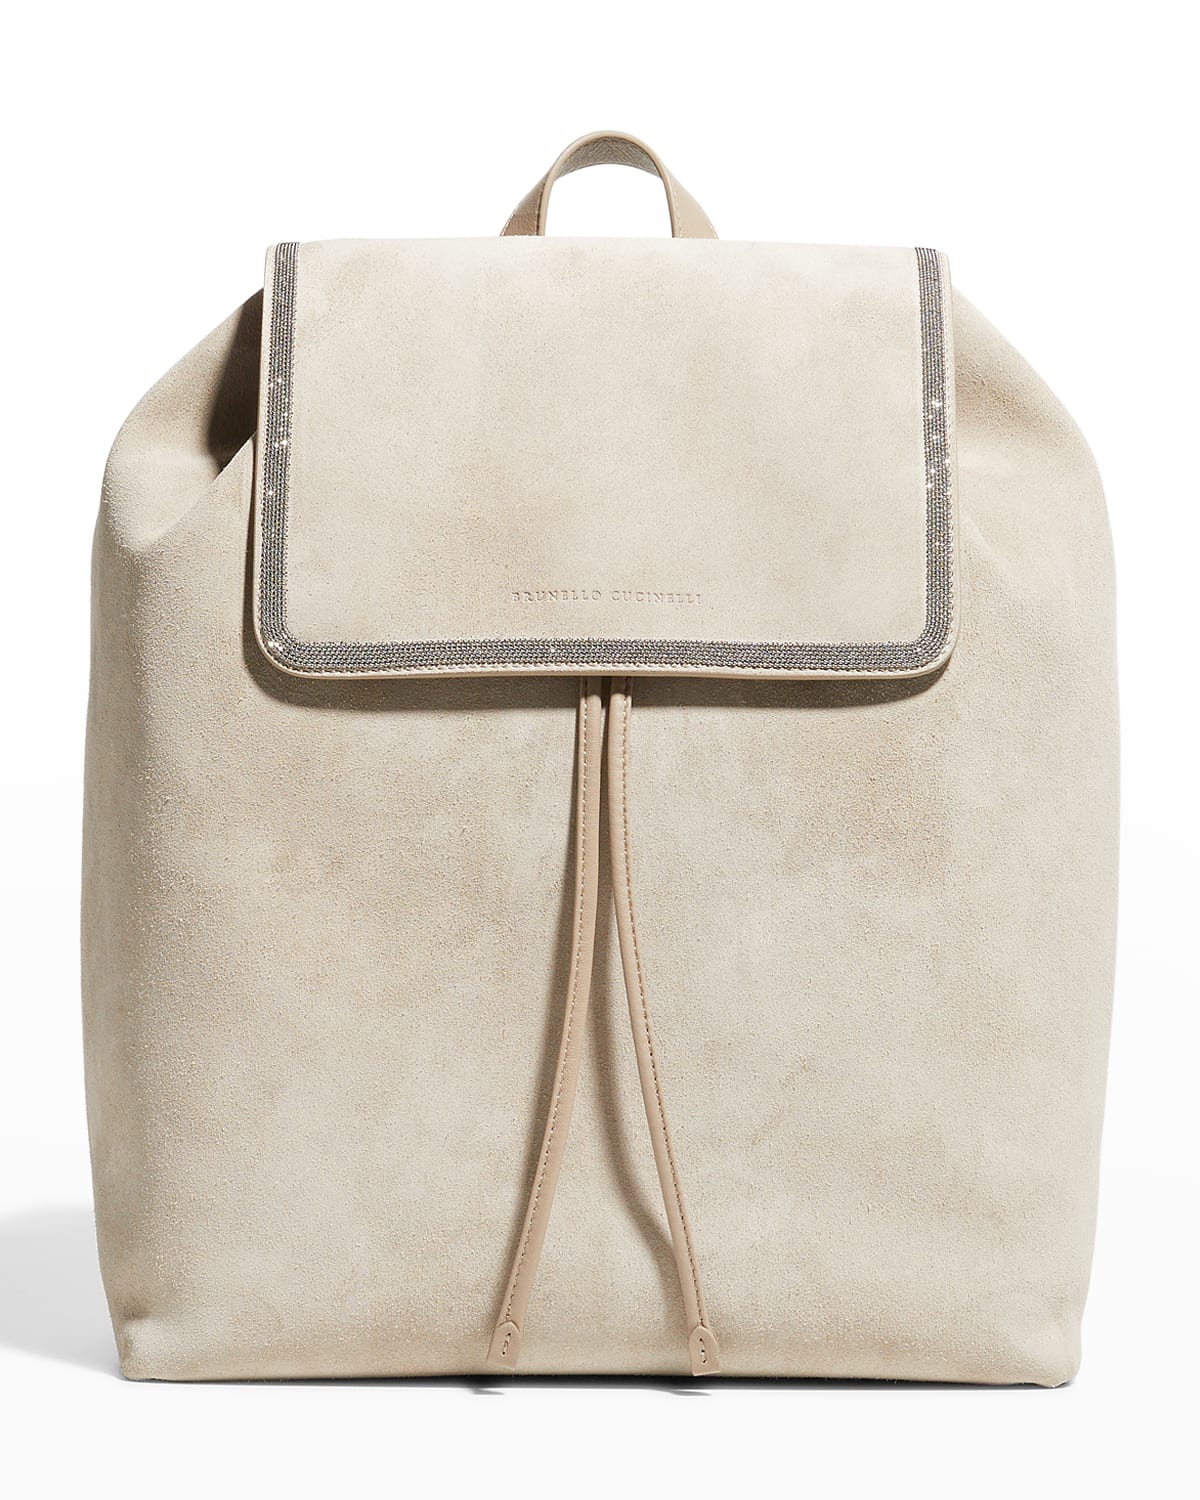 Brunello Cucinelli Monili Suede & Leather Drawstring Backpack